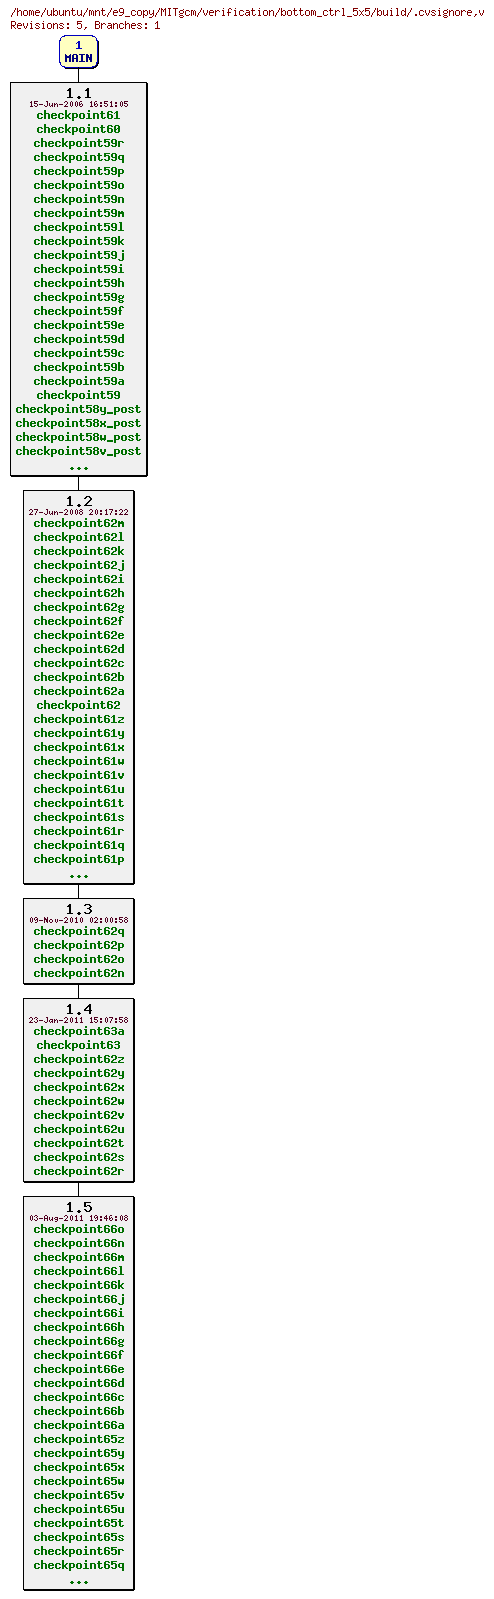 Revisions of MITgcm/verification/bottom_ctrl_5x5/build/.cvsignore